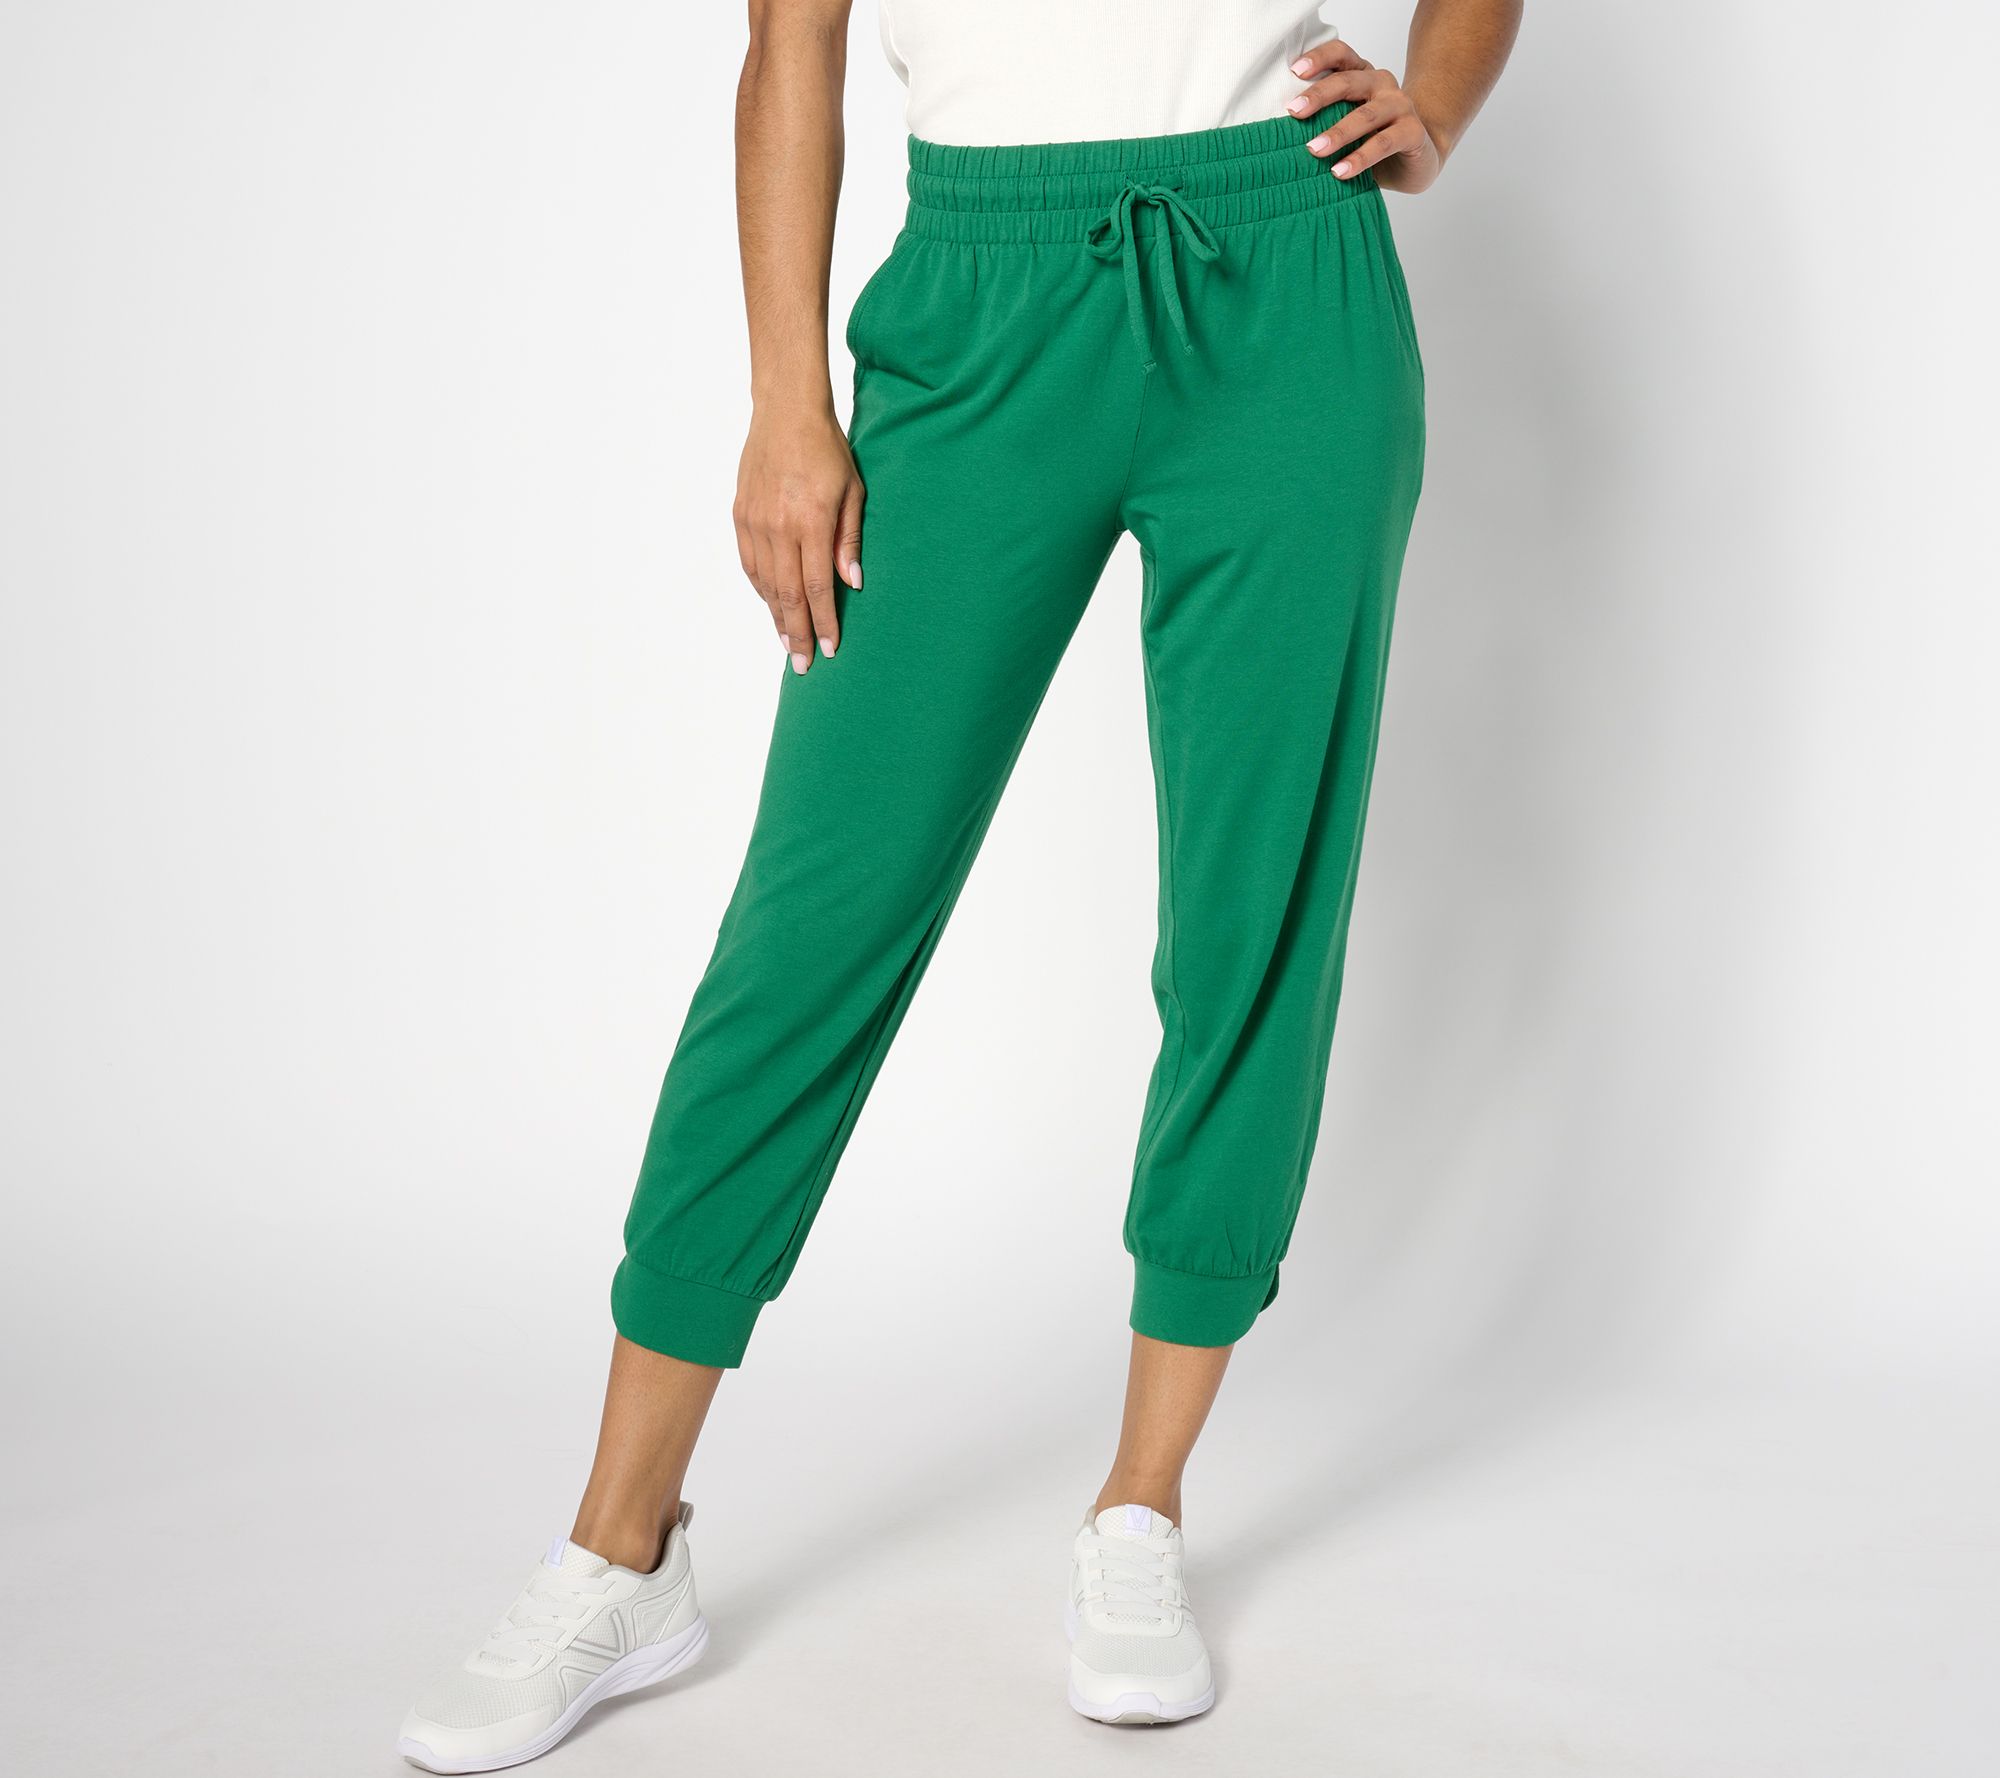 Remain Womens Juliana Knit Comfy Cozy Jogger Pants Loungewear BHFO